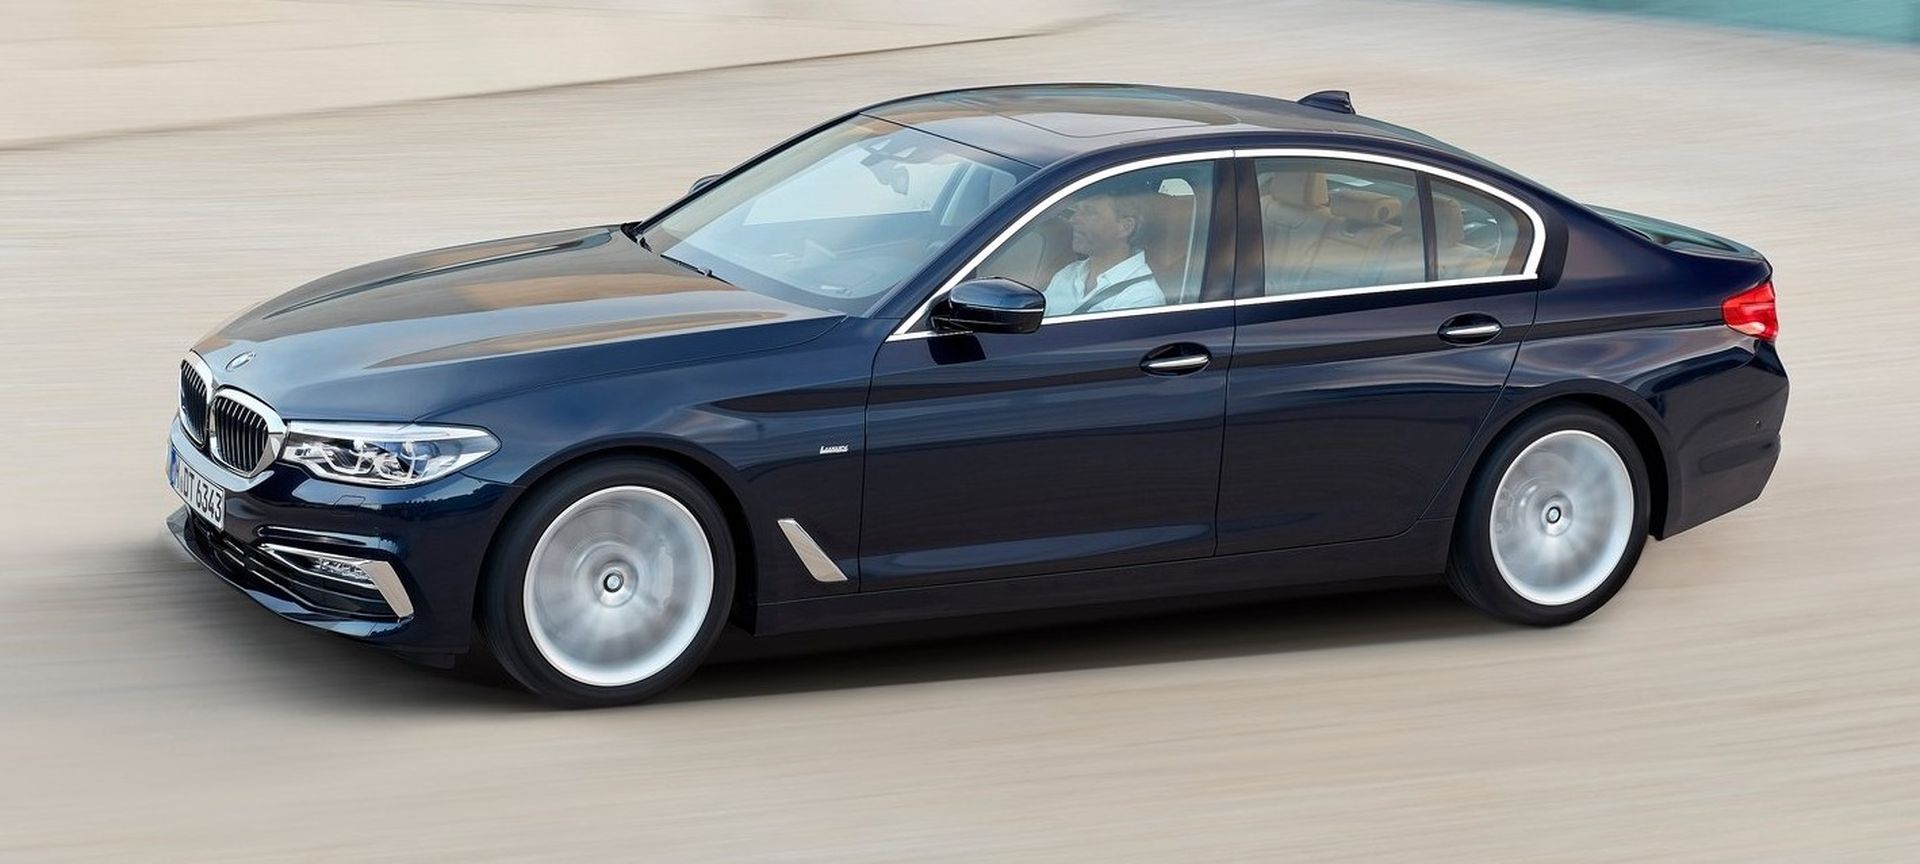 BMW Serii 5 G30 znamy dane, silniki i ceny Motocaina.pl